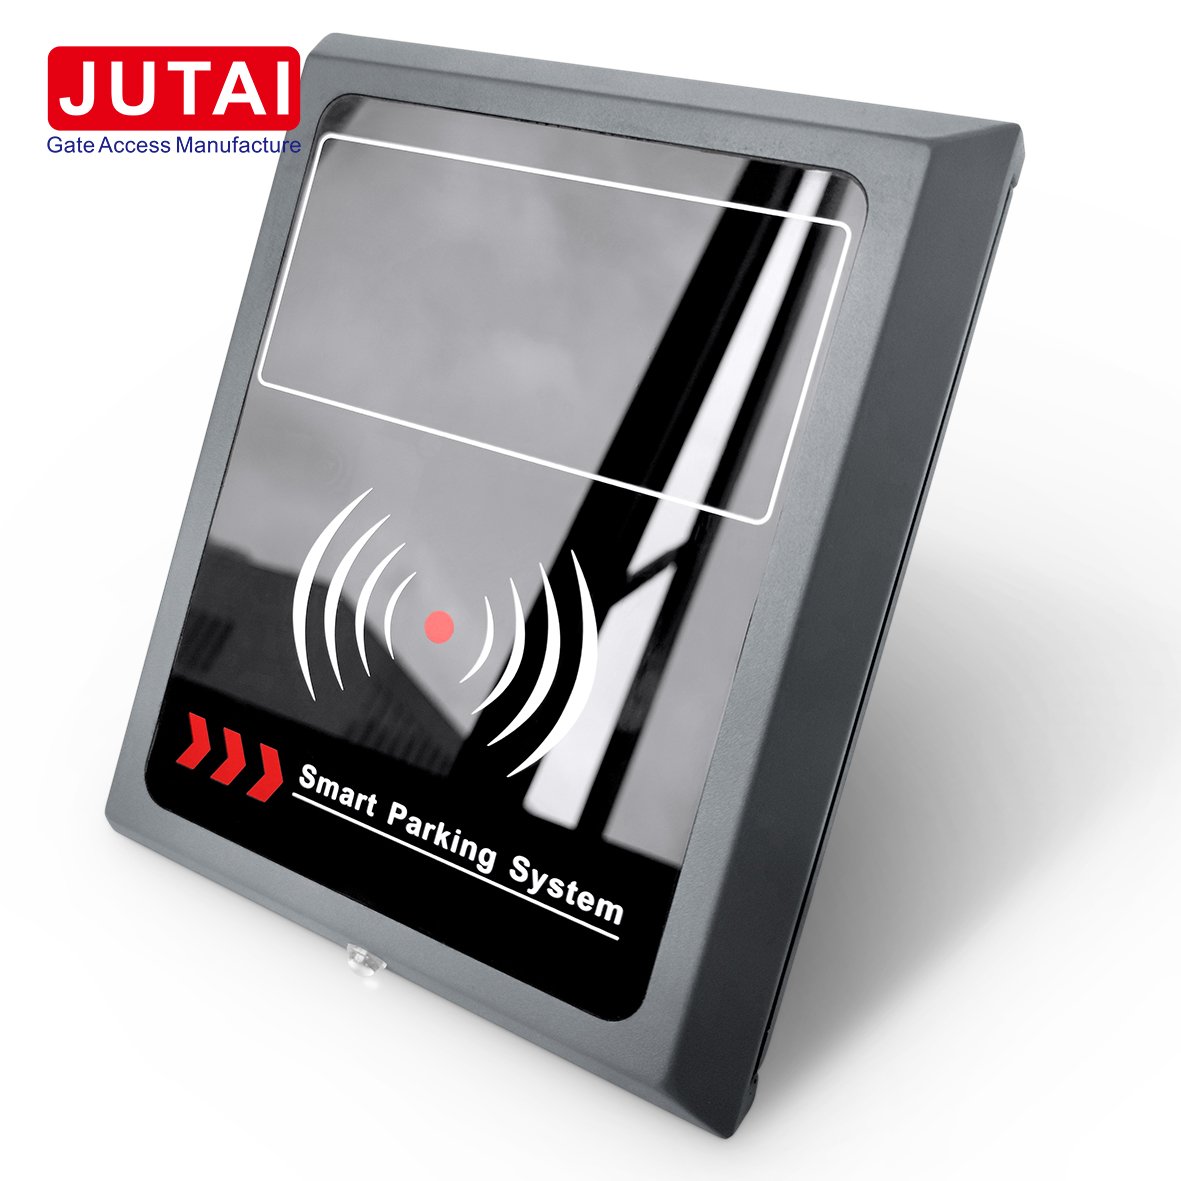 Long range Bluetooth RFID Reader with JUTAI High performance